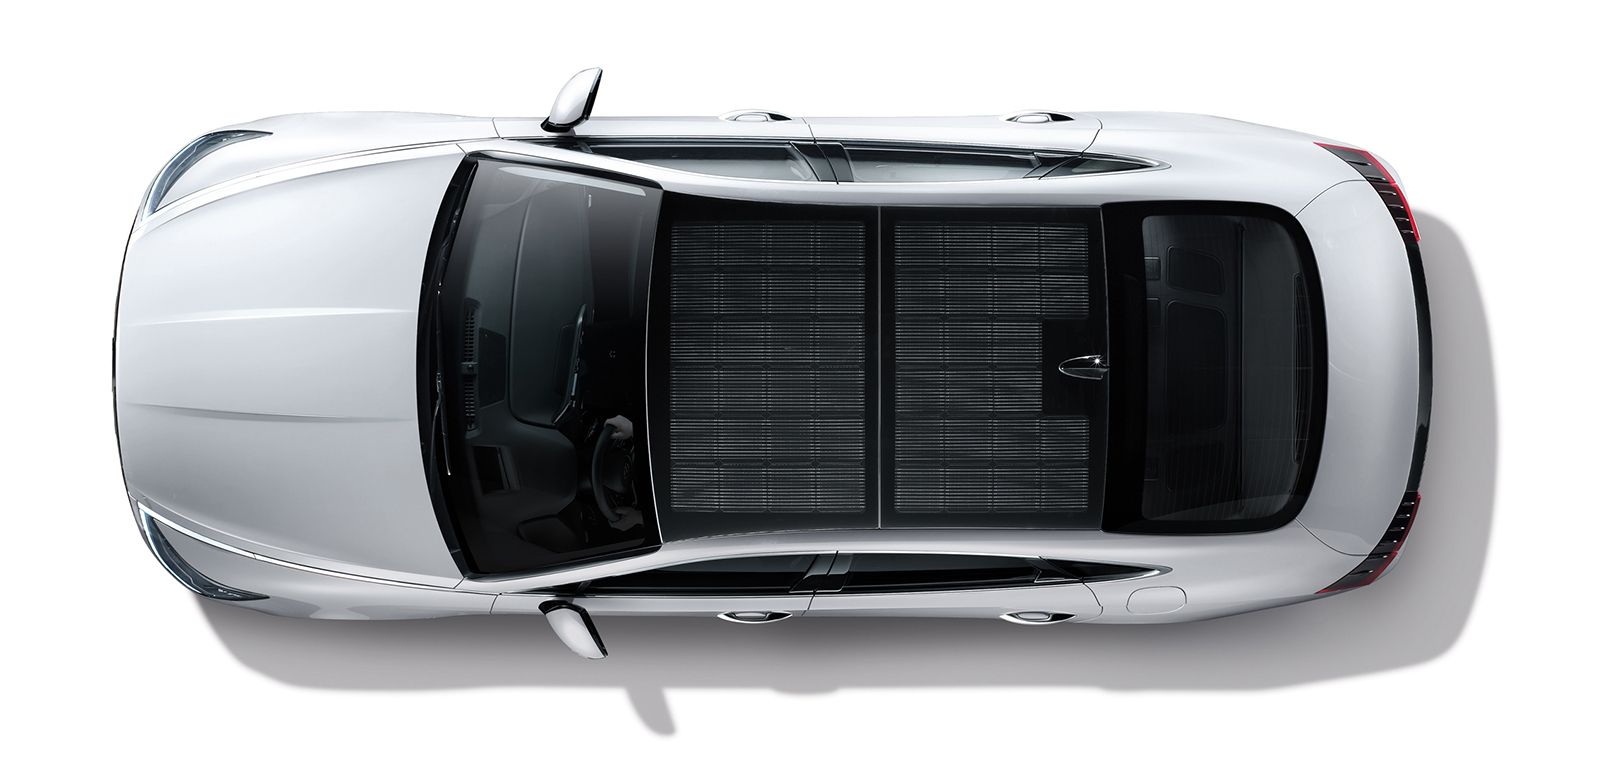 Hyundai New Sonata Hybrid With Solar Panel Roof Now On Sale image 2